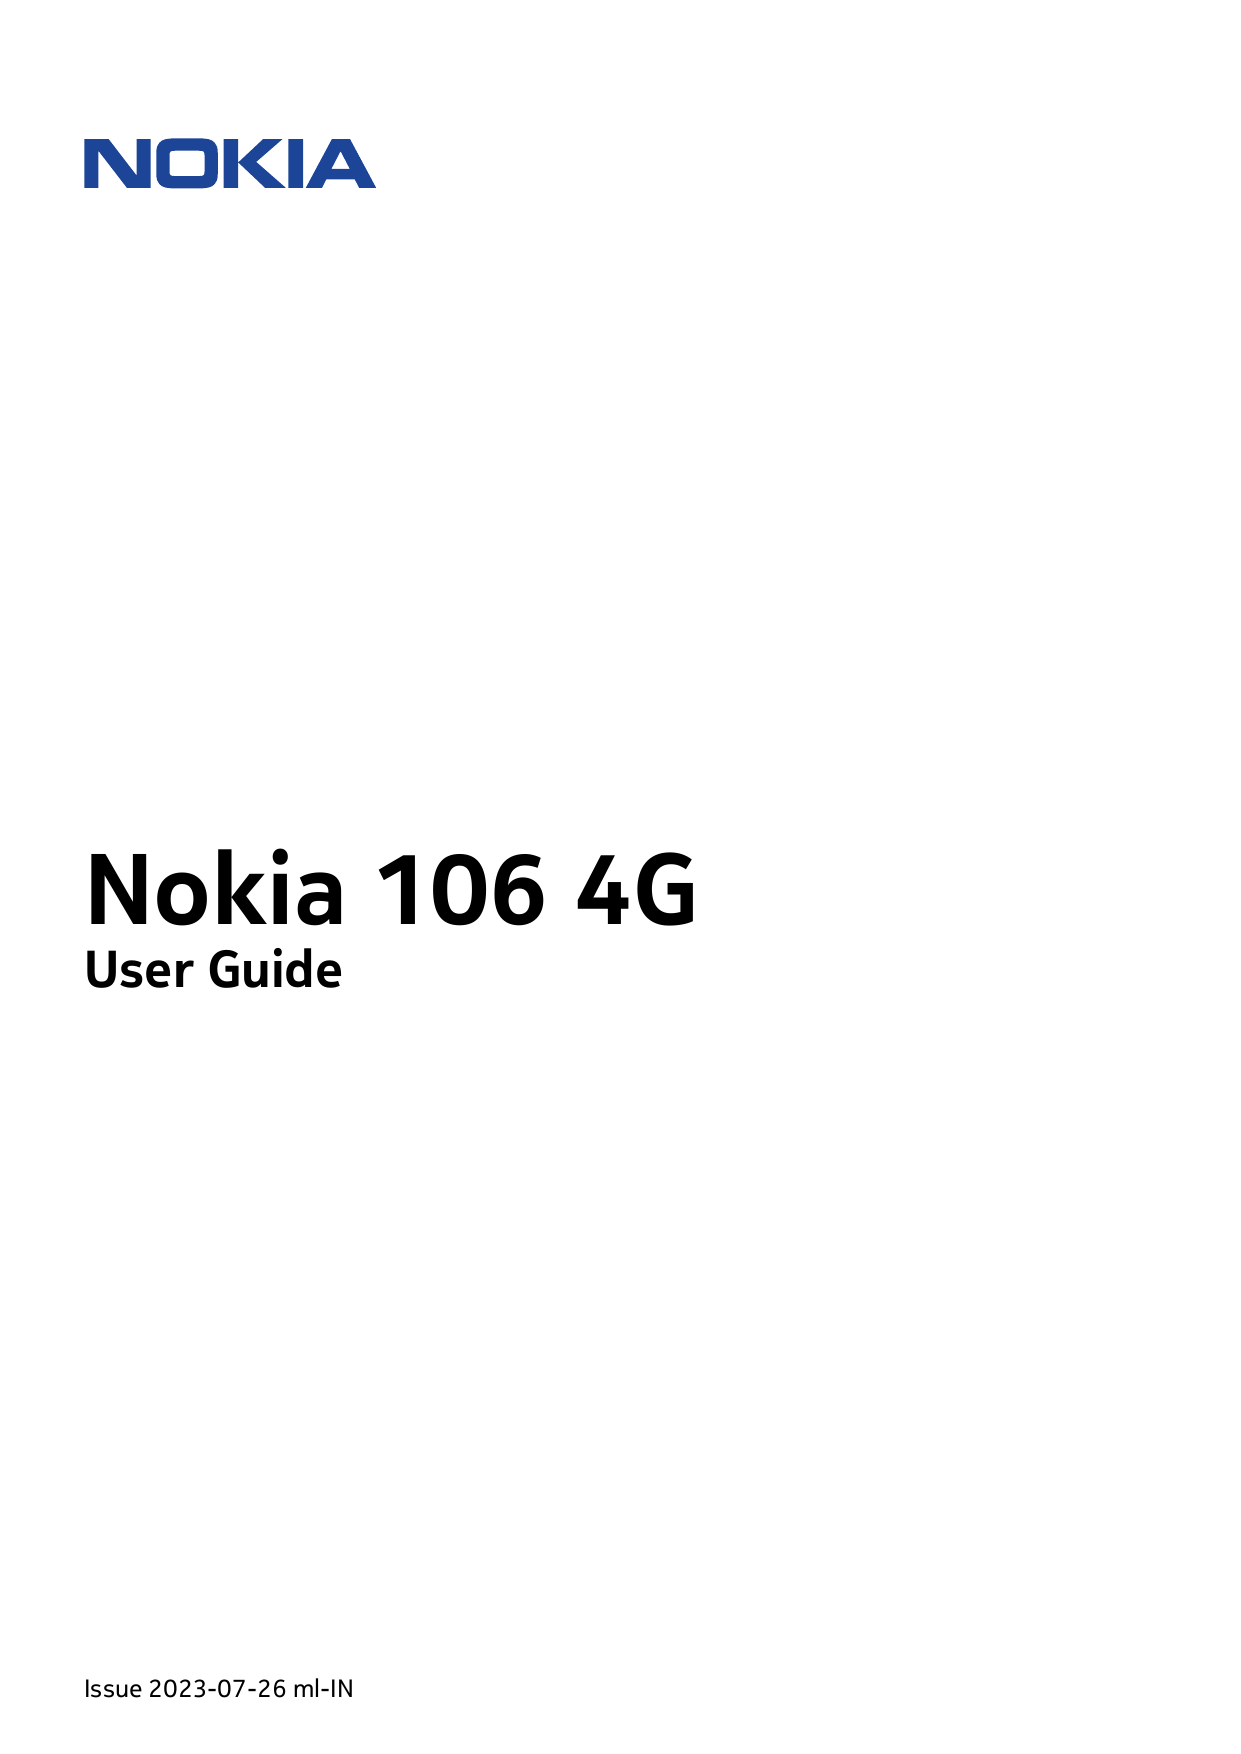 Nokia 106 4GUser GuideIssue 2023-07-26 ml-IN